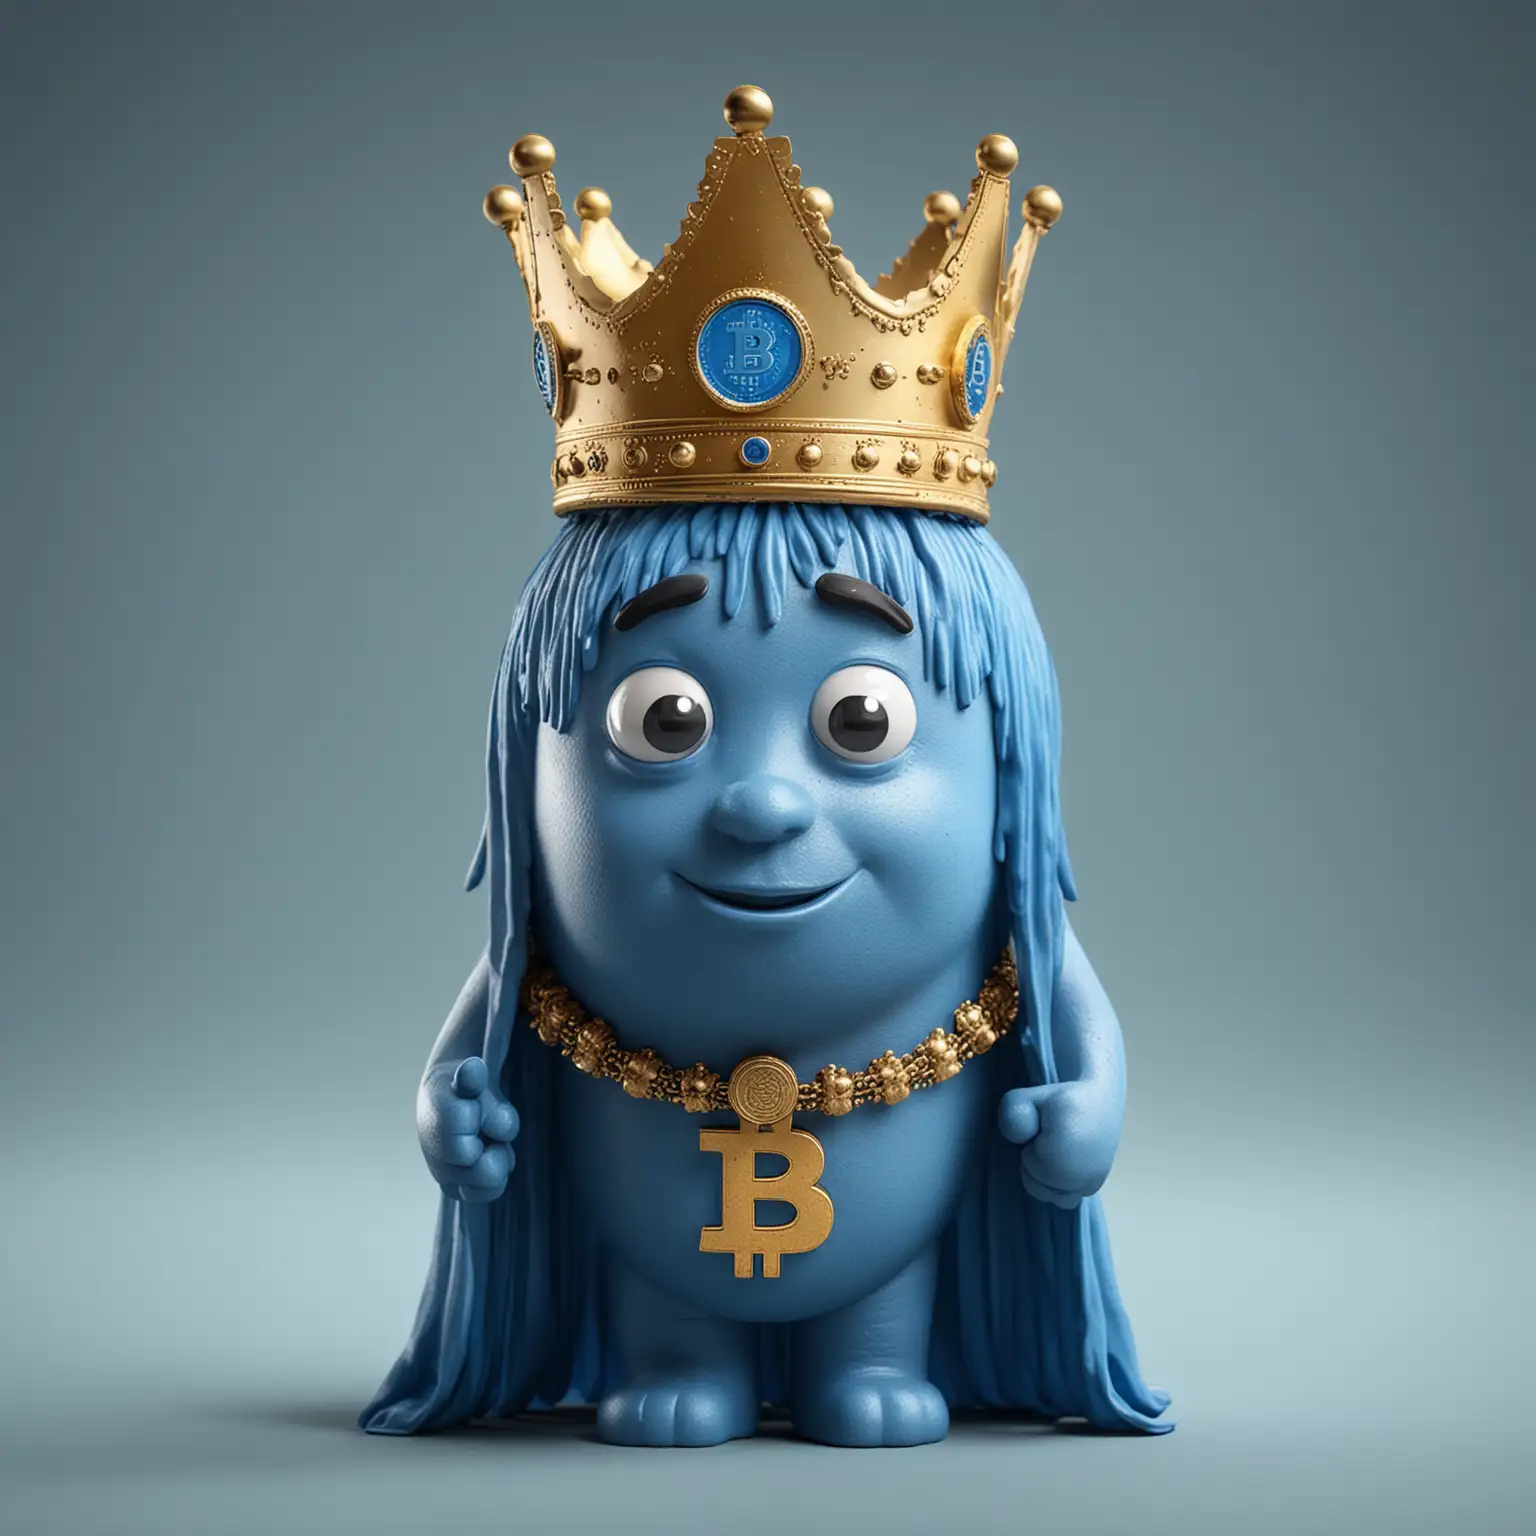 Royal Bitcoin Figure Wearing a Blue Crown